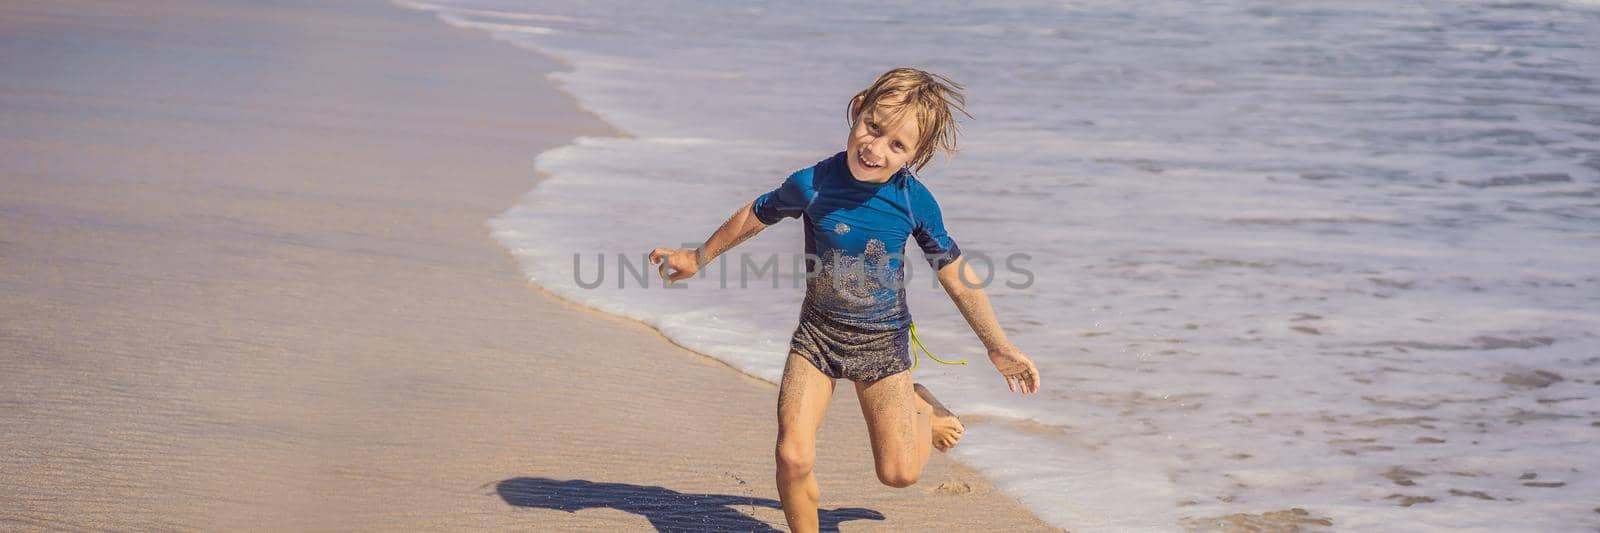 Cute little boy having fun on tropical beach during summer vacation BANNER, LONG FORMAT by galitskaya